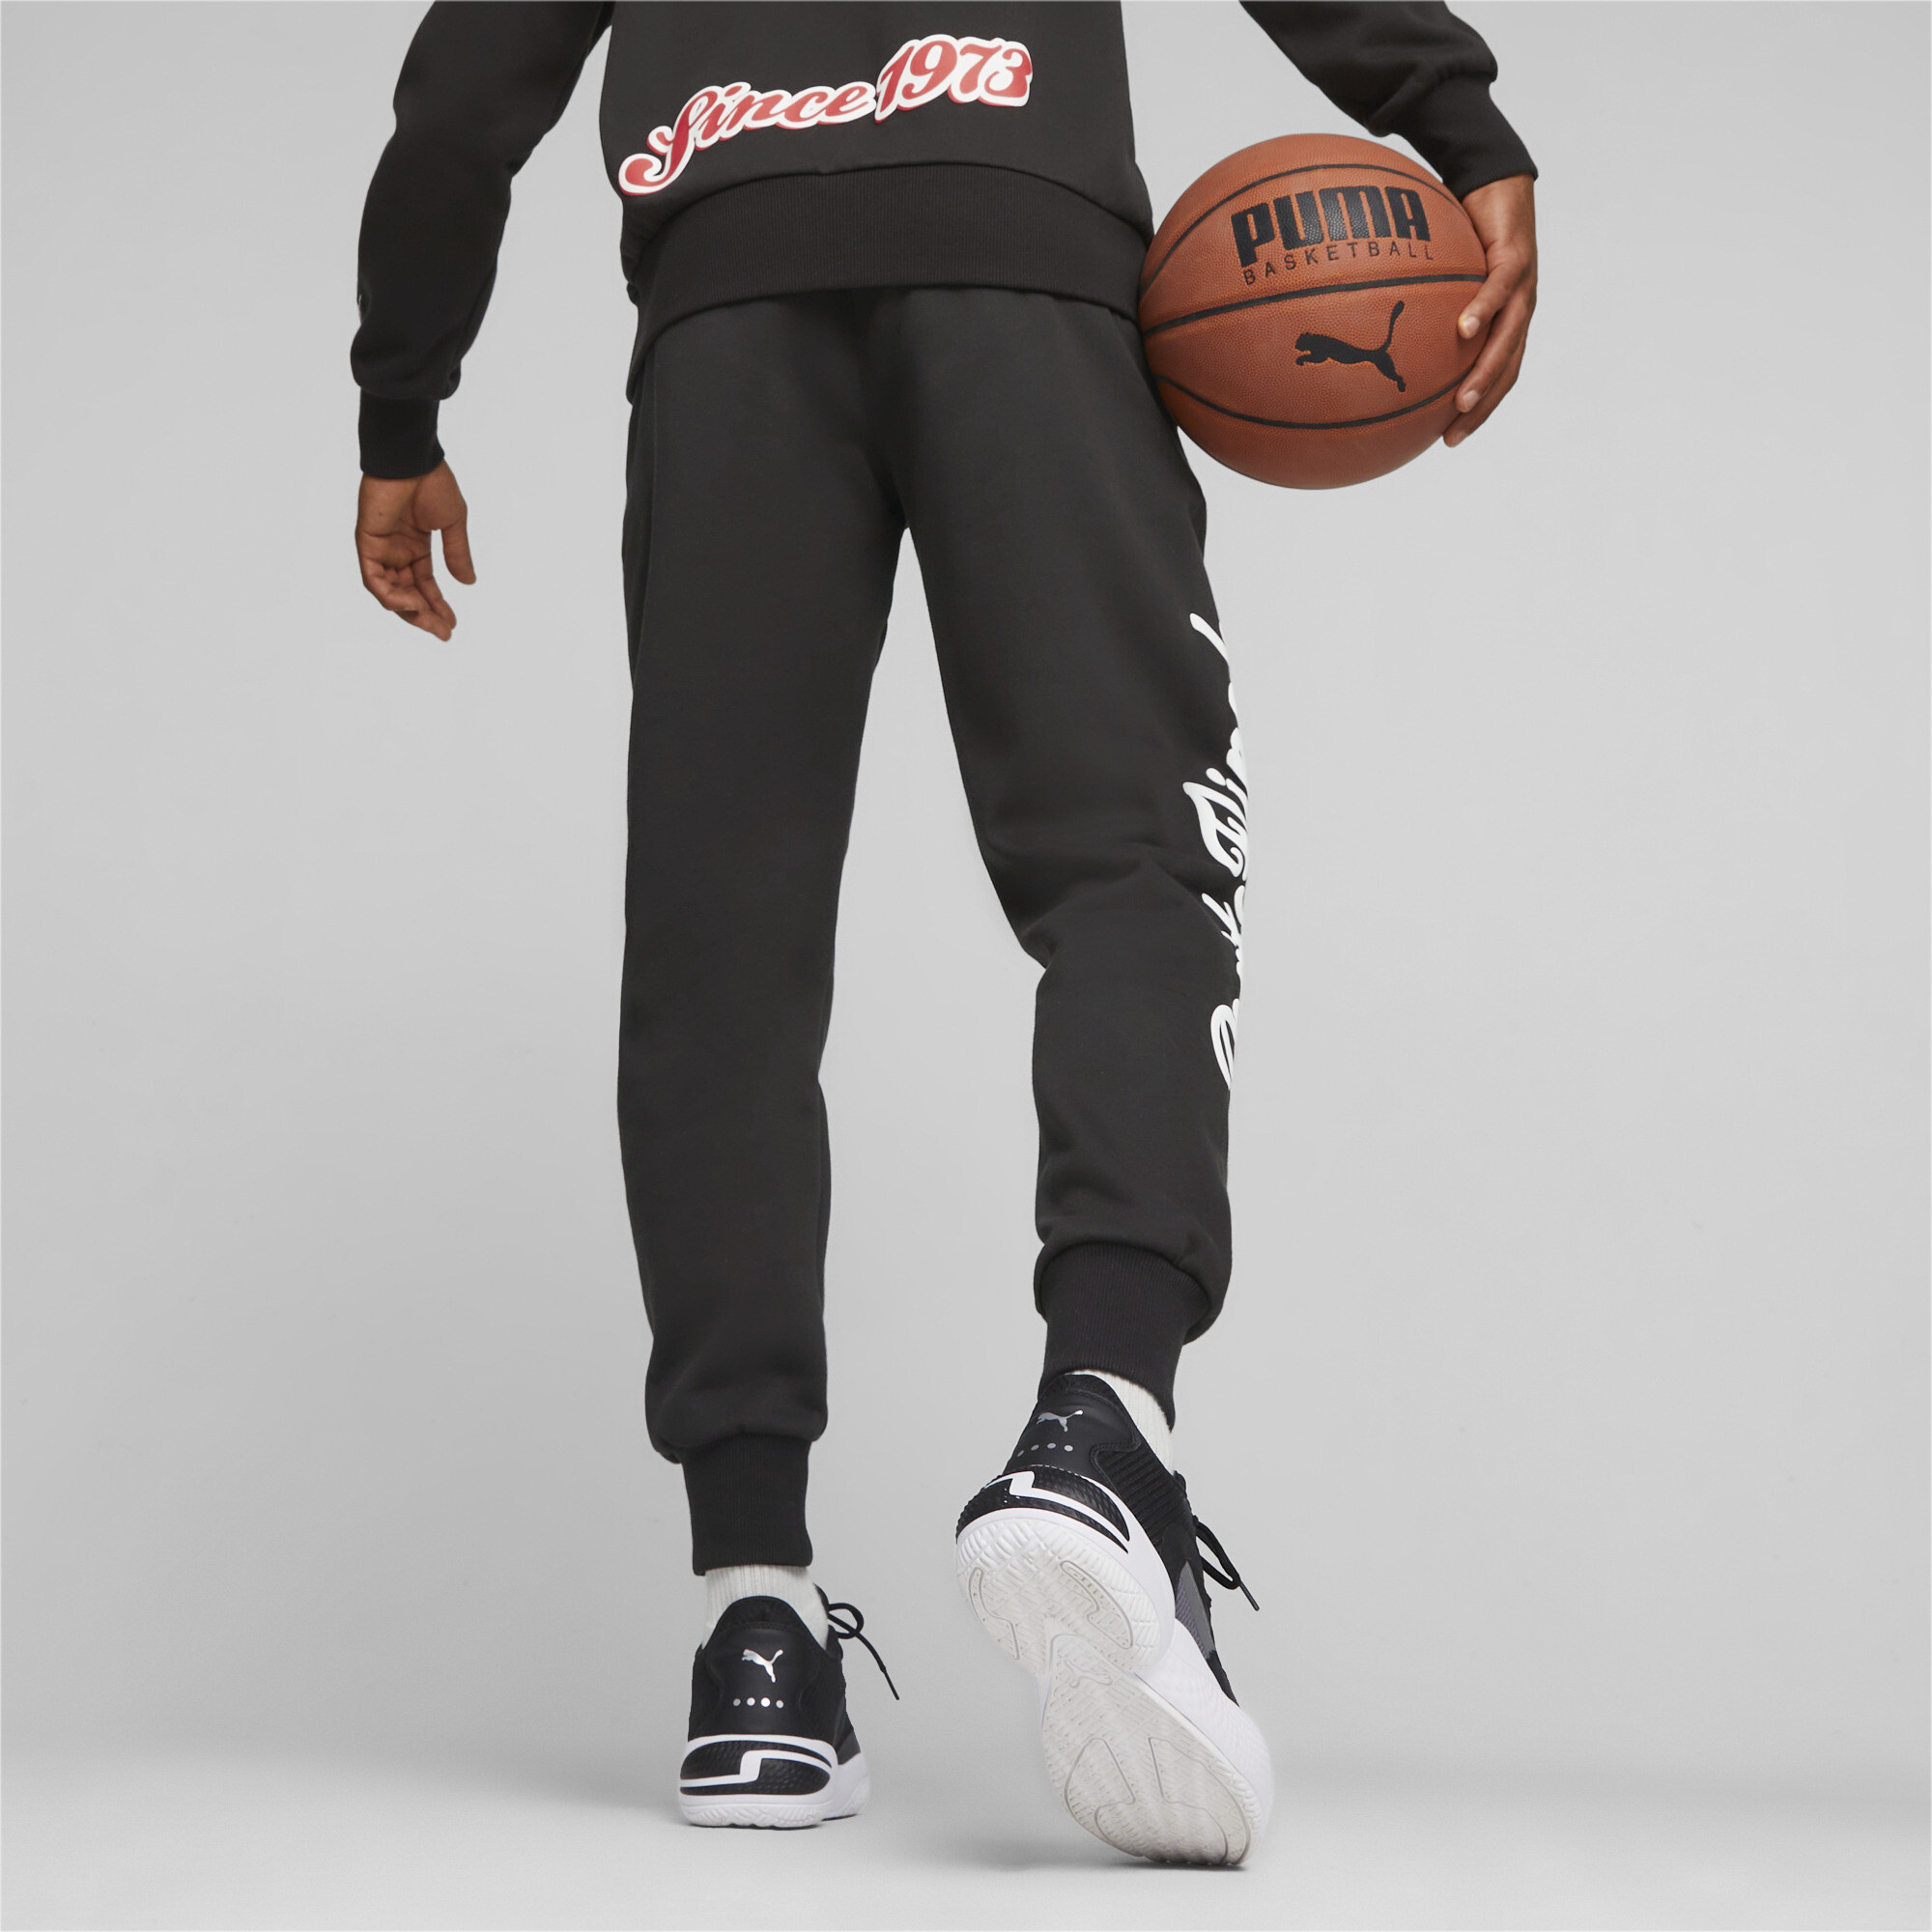 Men's Puma DYLAN's Basketball Sweatpants, Black, Size M, Clothing